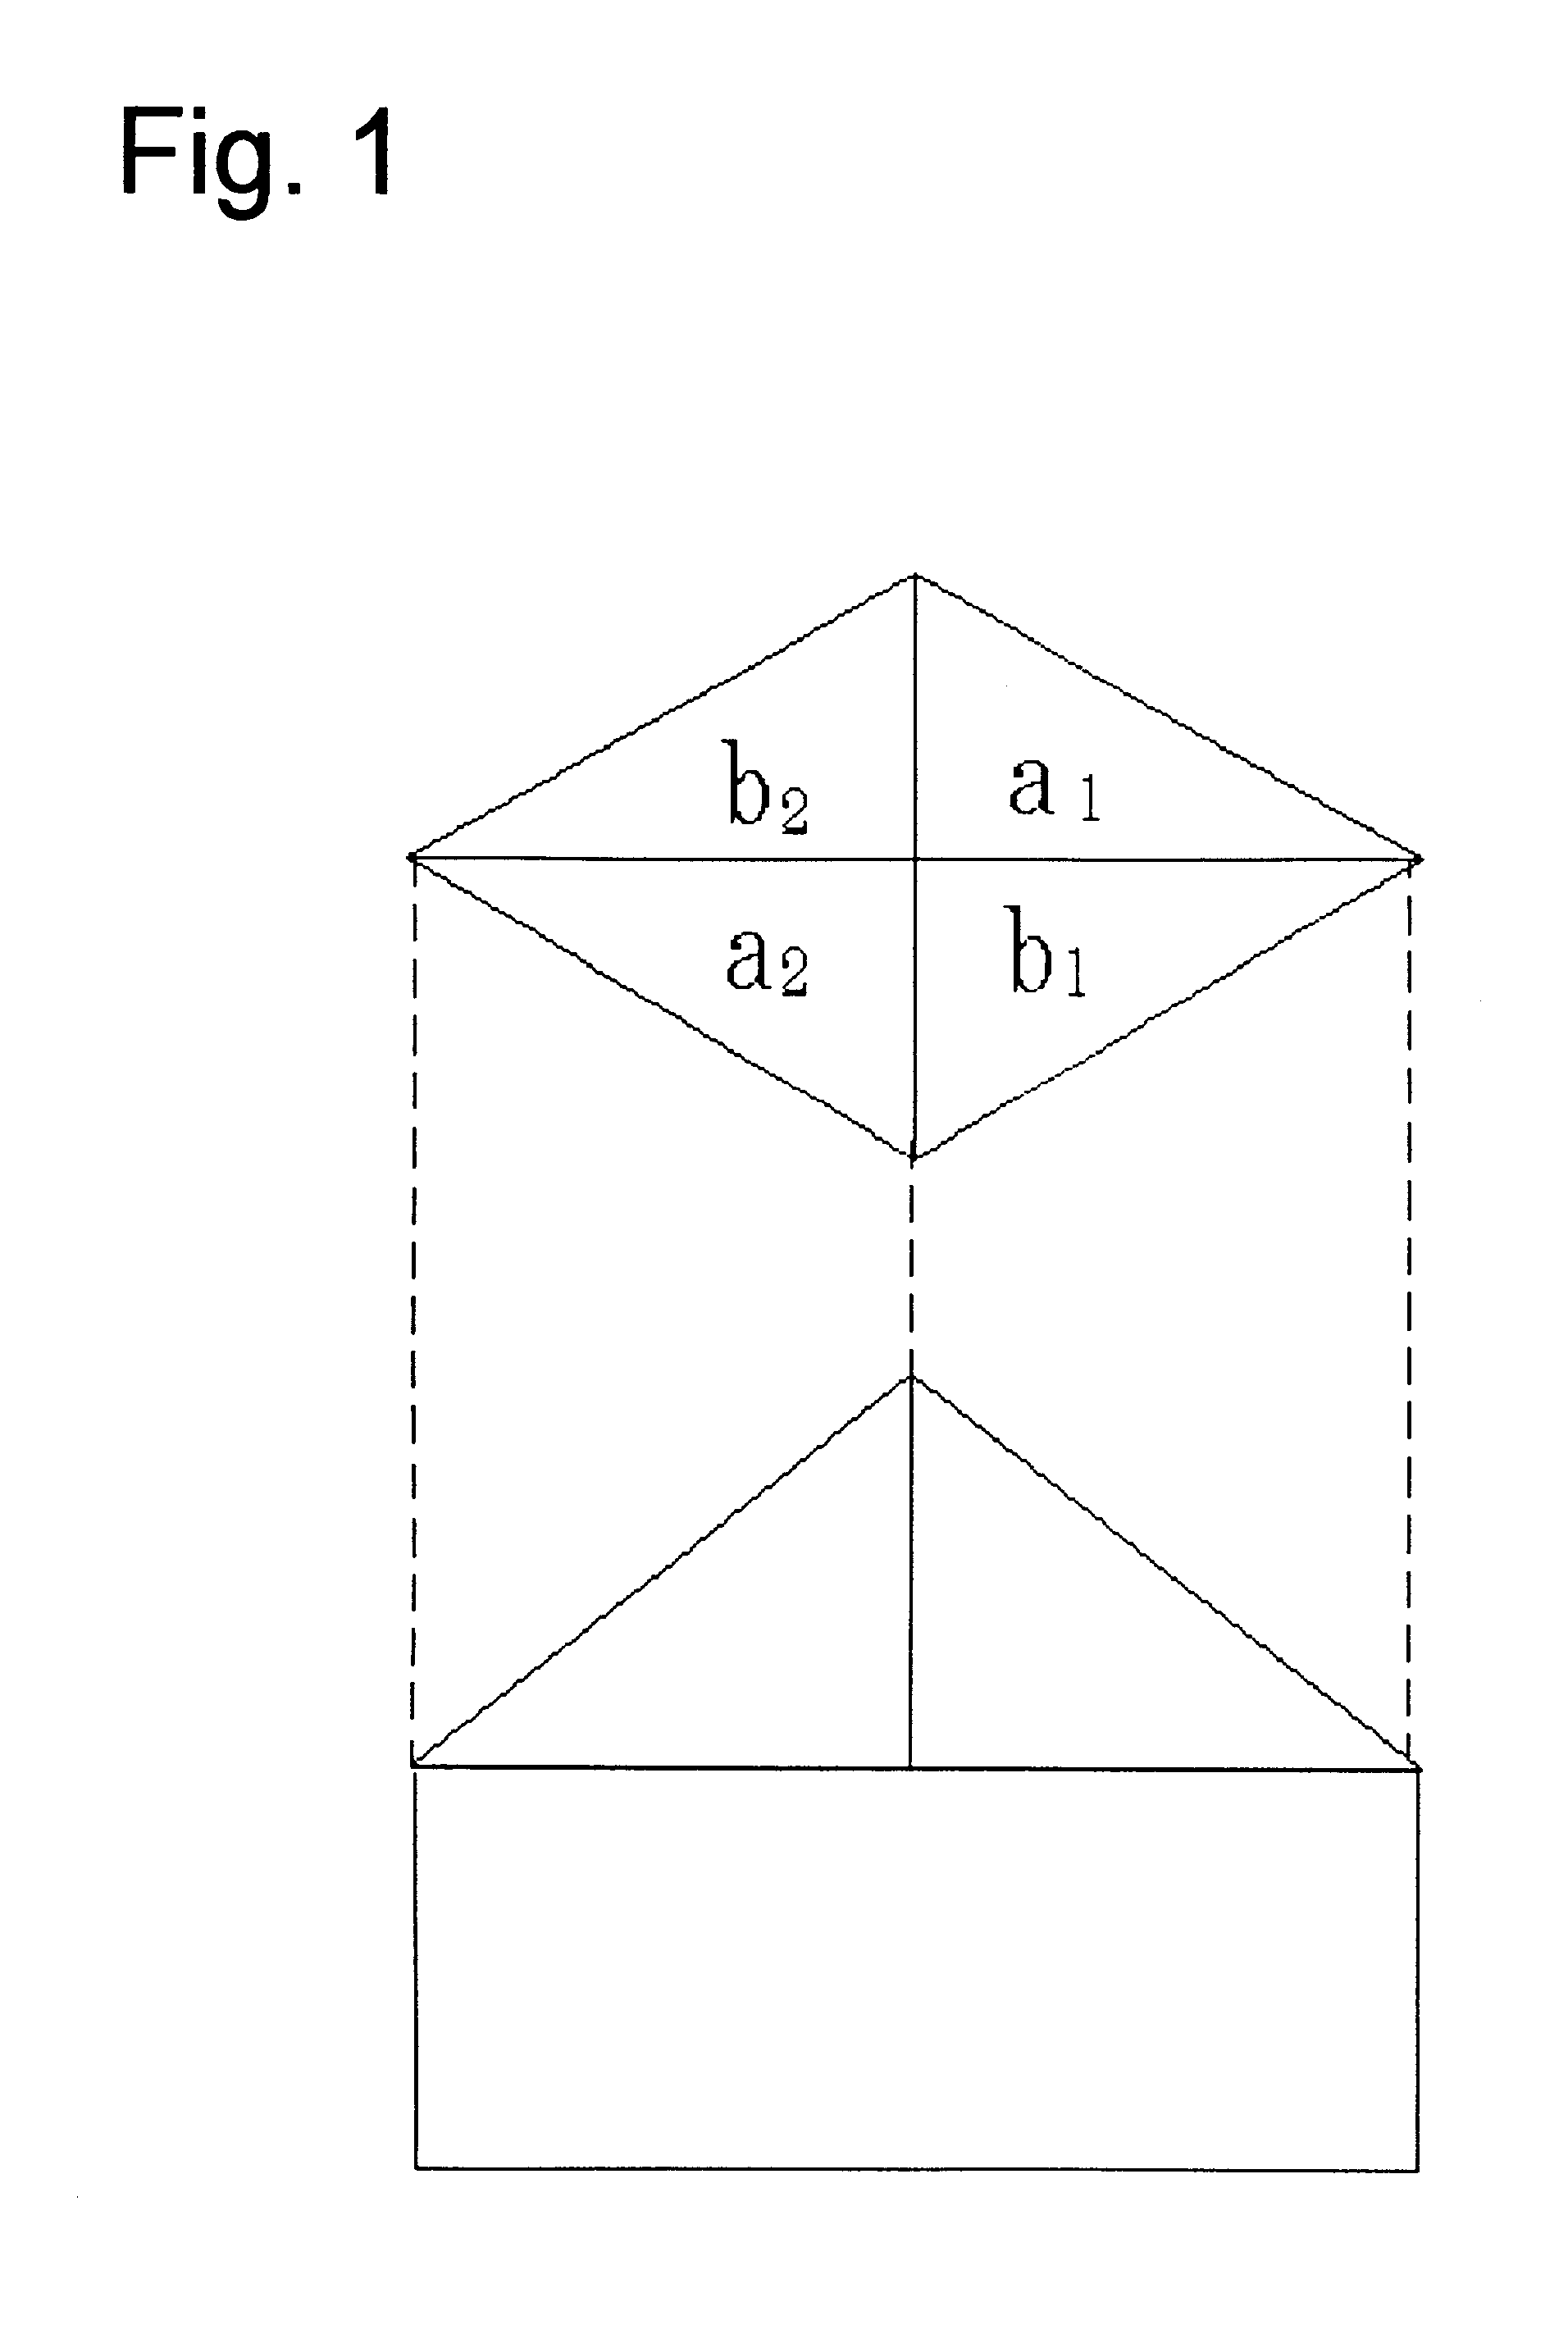 Triangular-pyramidal cube-corner retro-reflective sheeting